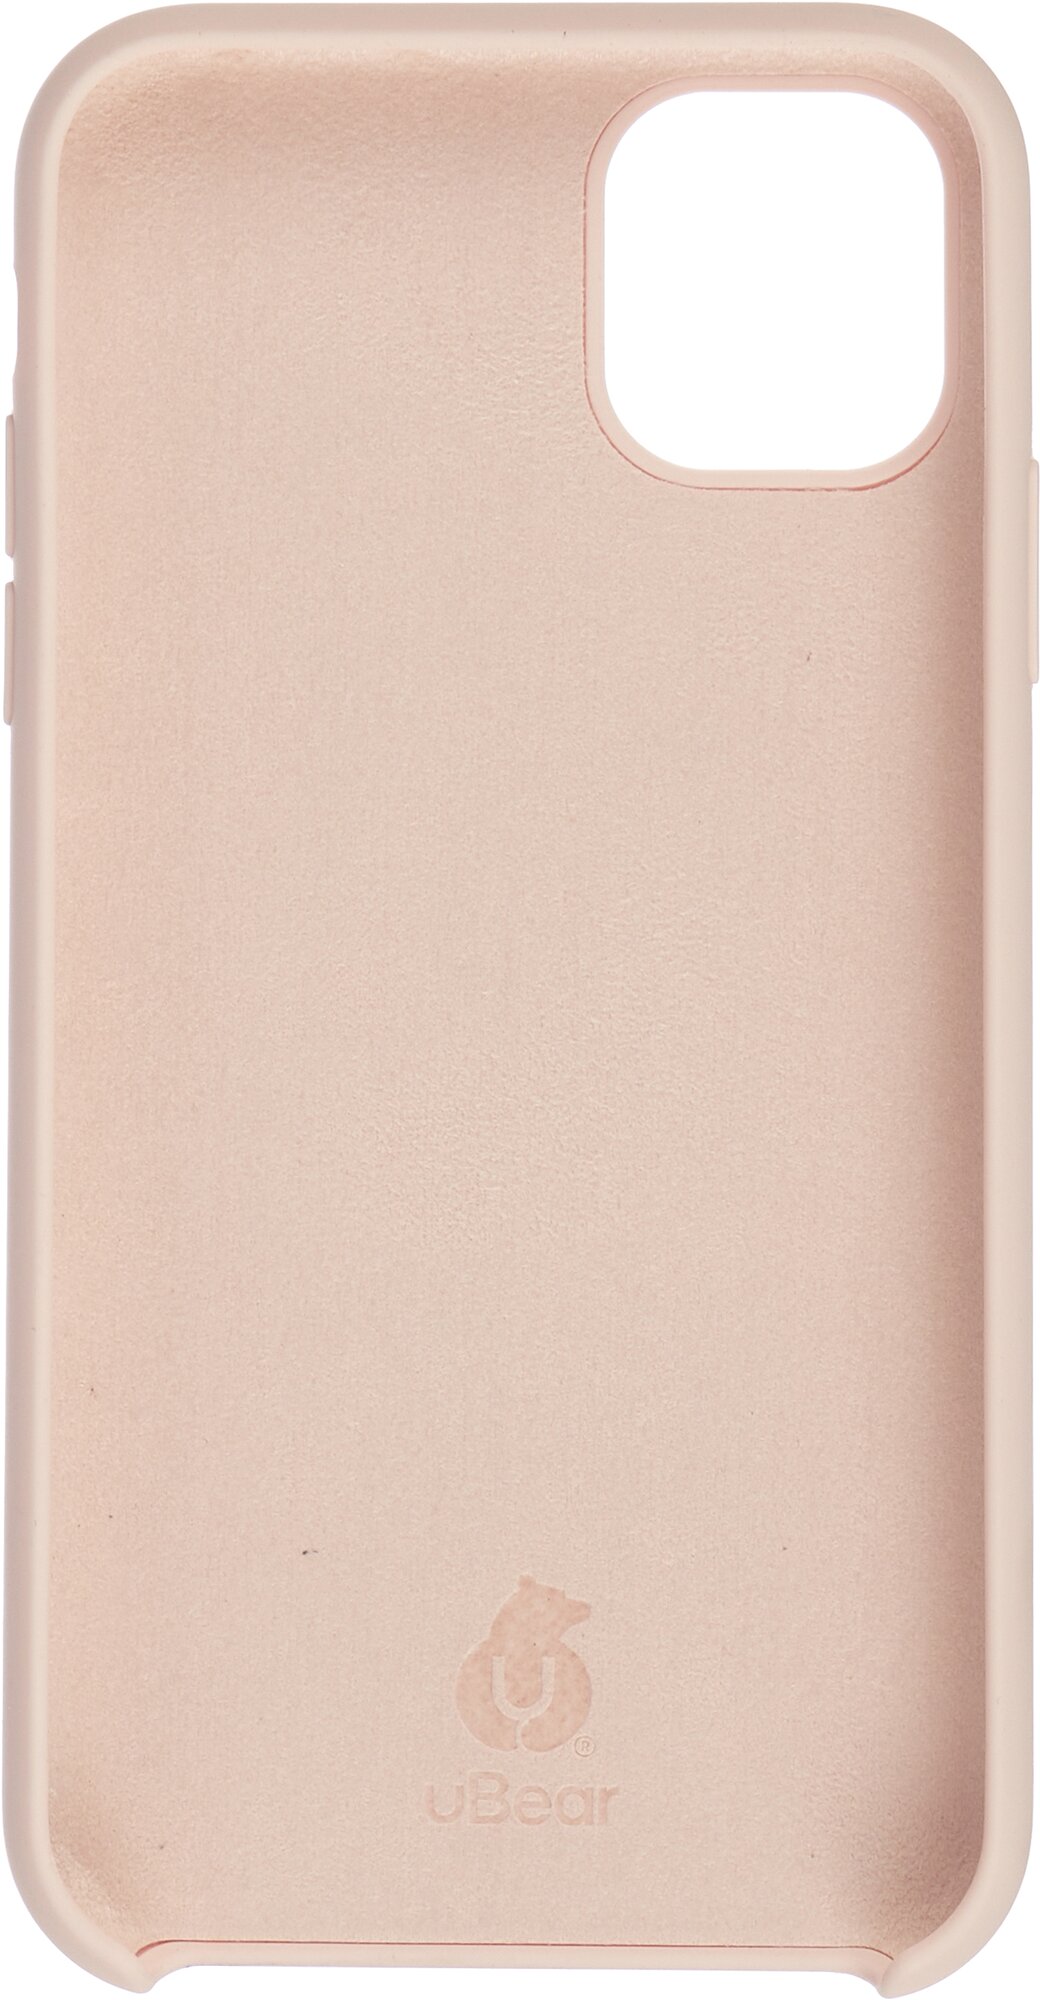 Чехол (клип-кейс) UBEAR Touch Case, для Apple iPhone 11, белый [cs51wh61-i19] - фото №2